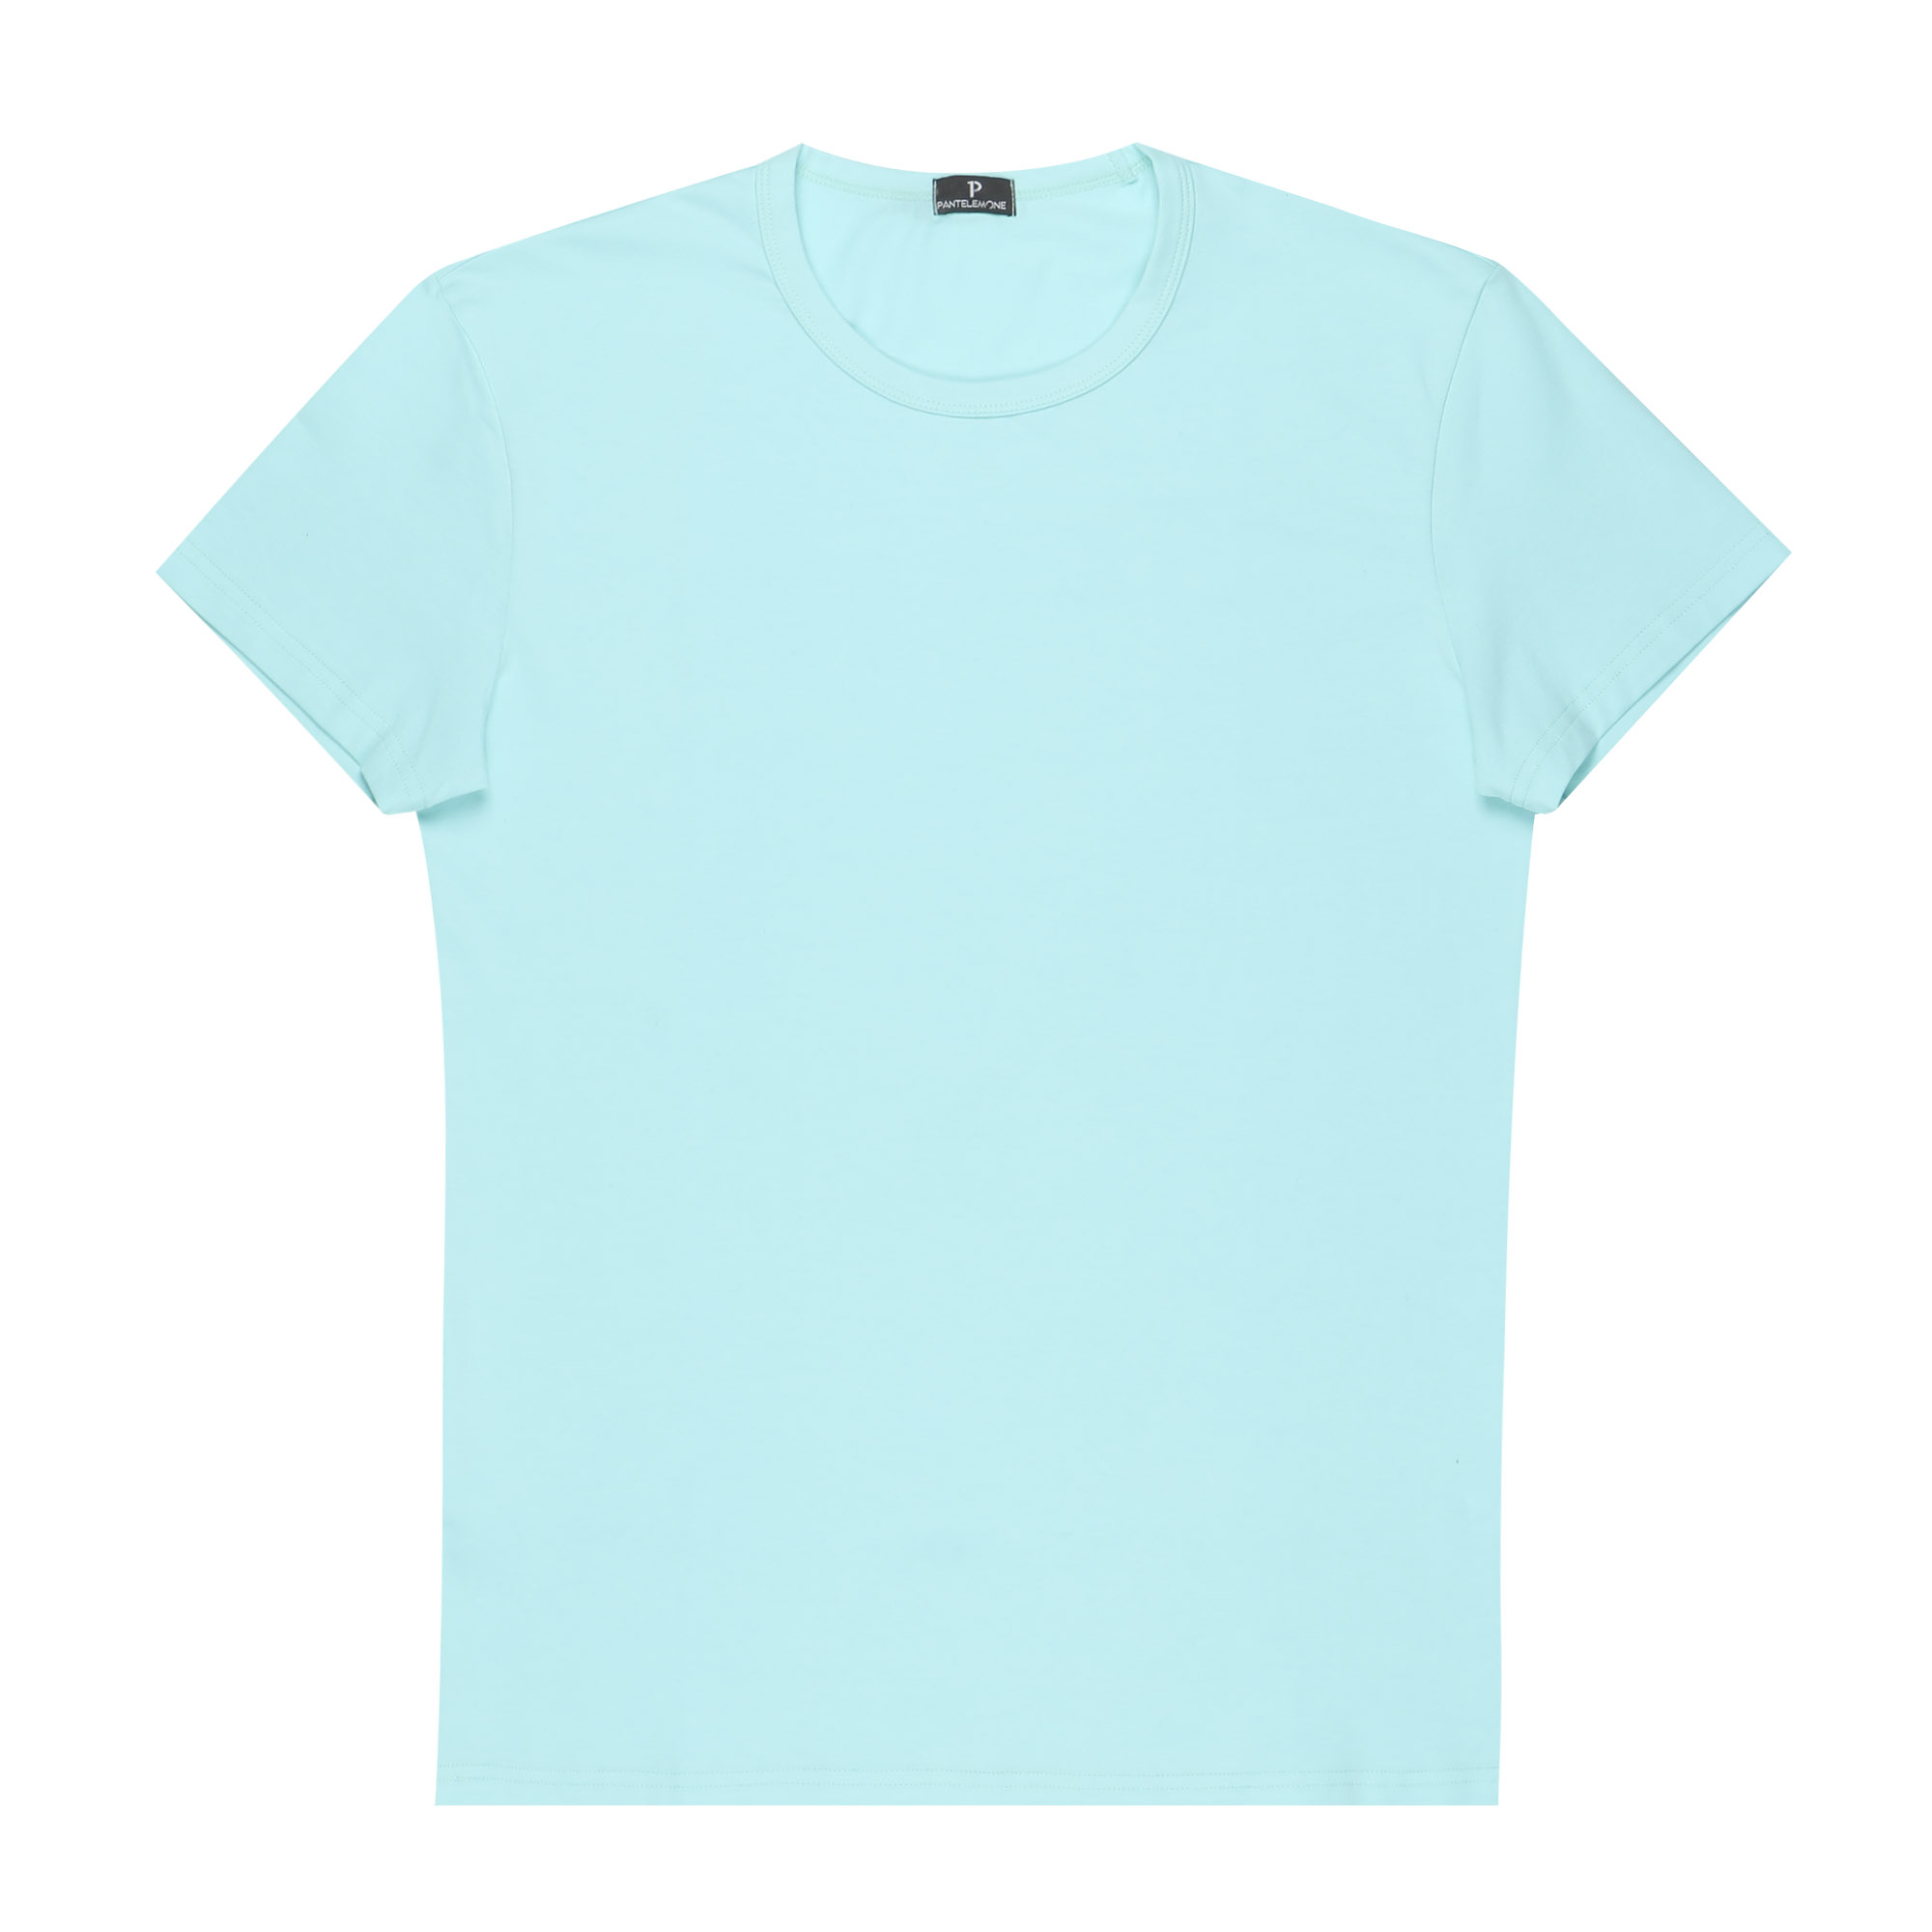 Мужская футболка Pantelemone MF-914 46 ментоловая, цвет ментоловый, размер 46 - фото 1